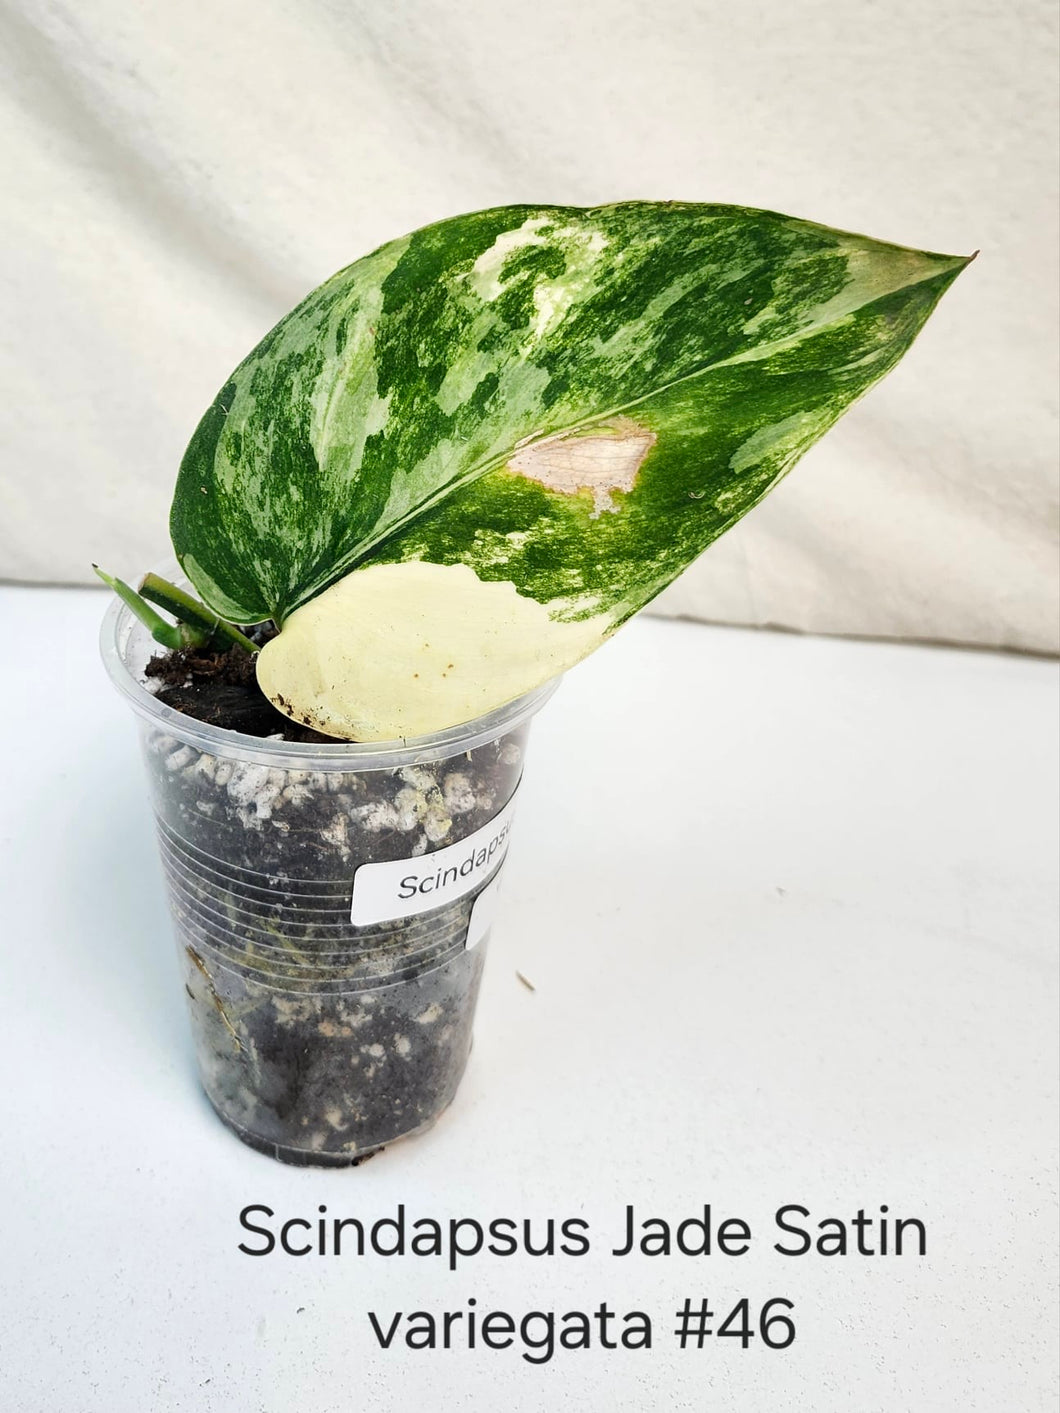 Scindapsus jade satin variegata #46